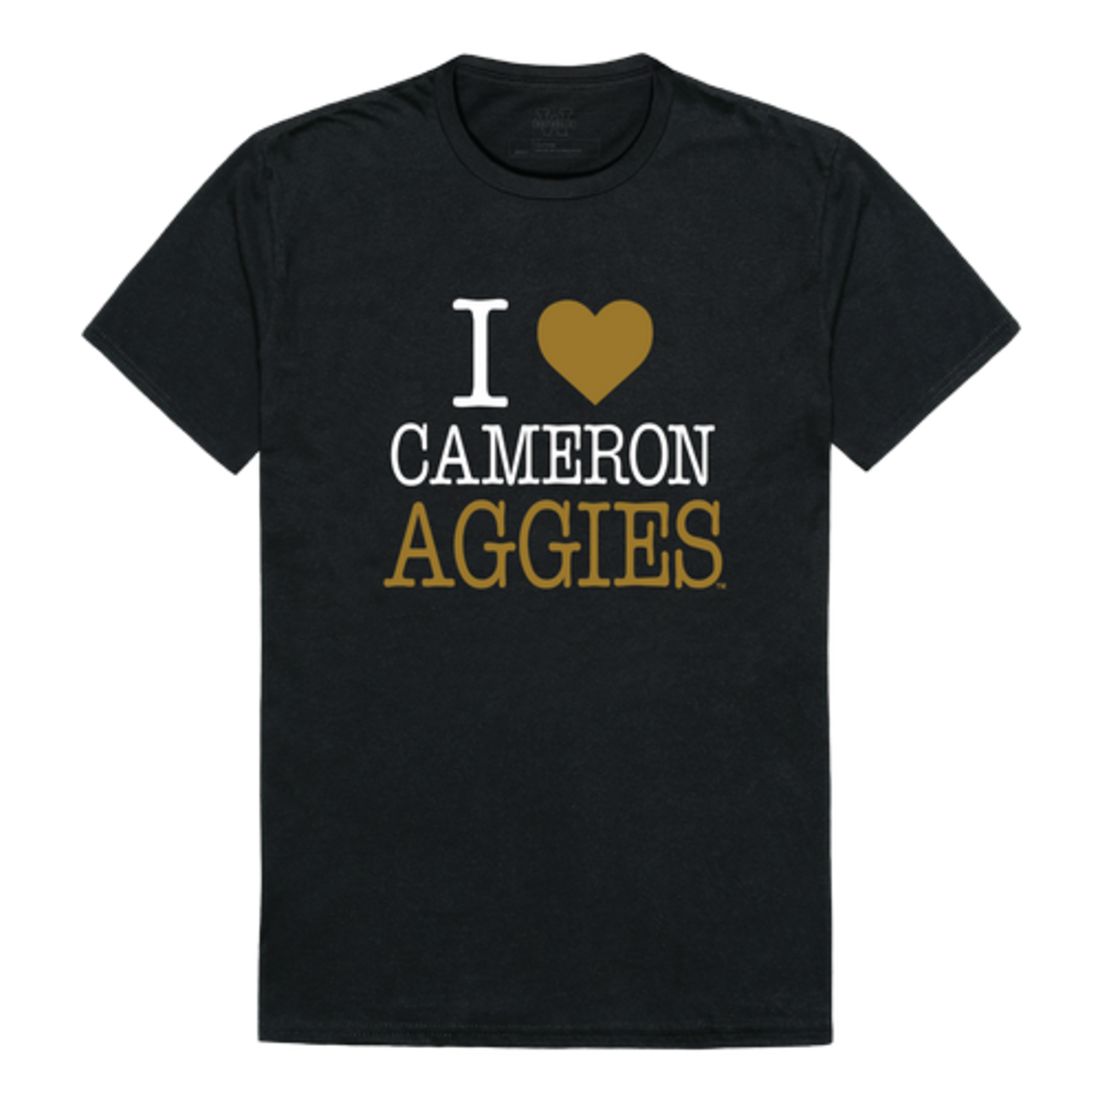 I Love Cameron University Aggies T-Shirt Tee